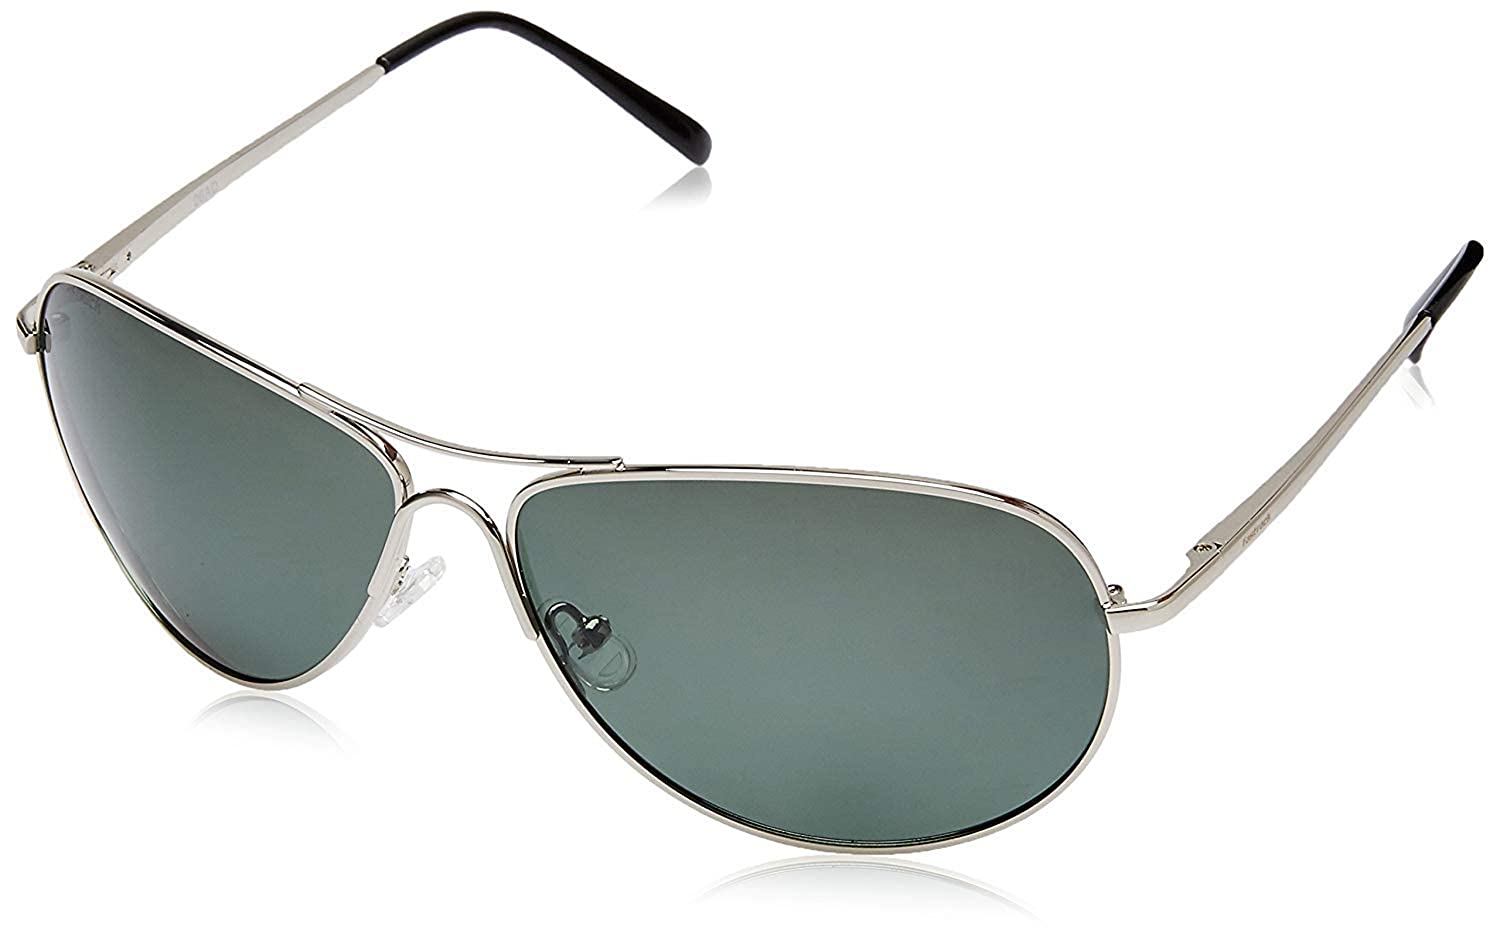 Fastrack Aviator Sunglasses Online at Best Price - Halabh